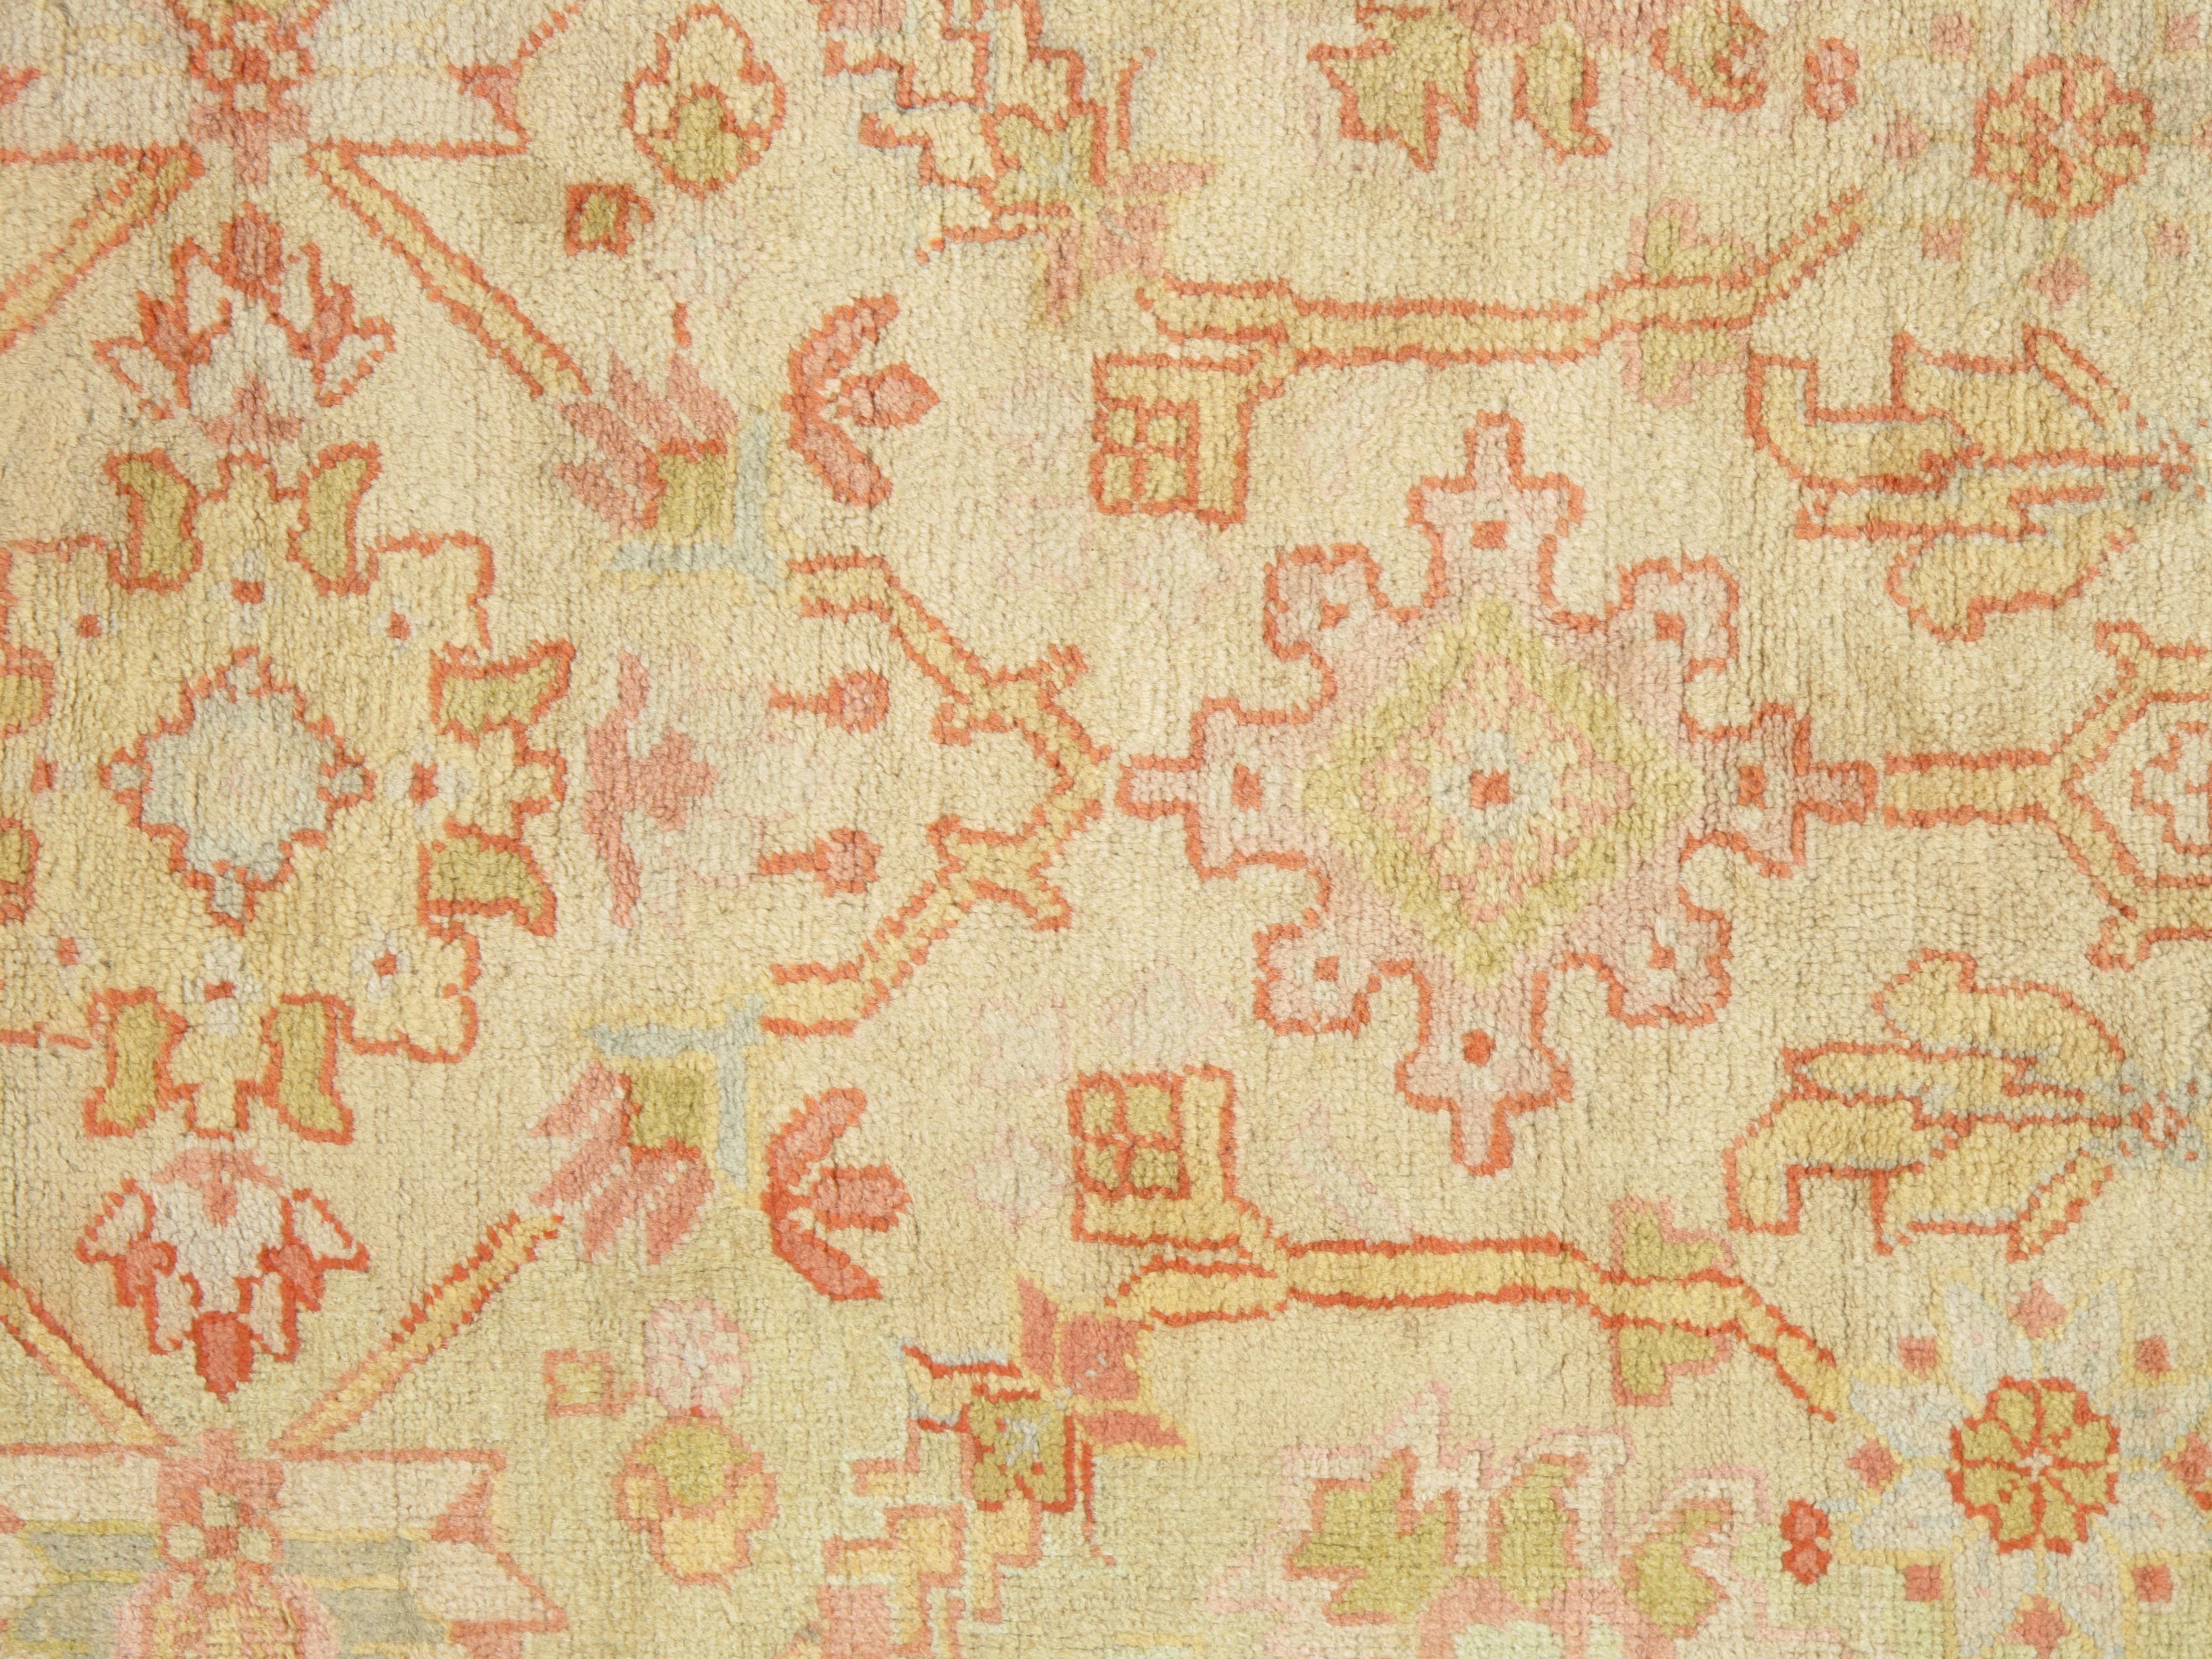 Antique Turkish Oushak Carpet, Handmade Oriental Rug, Beige, Taupe, Sage, Coral For Sale 4